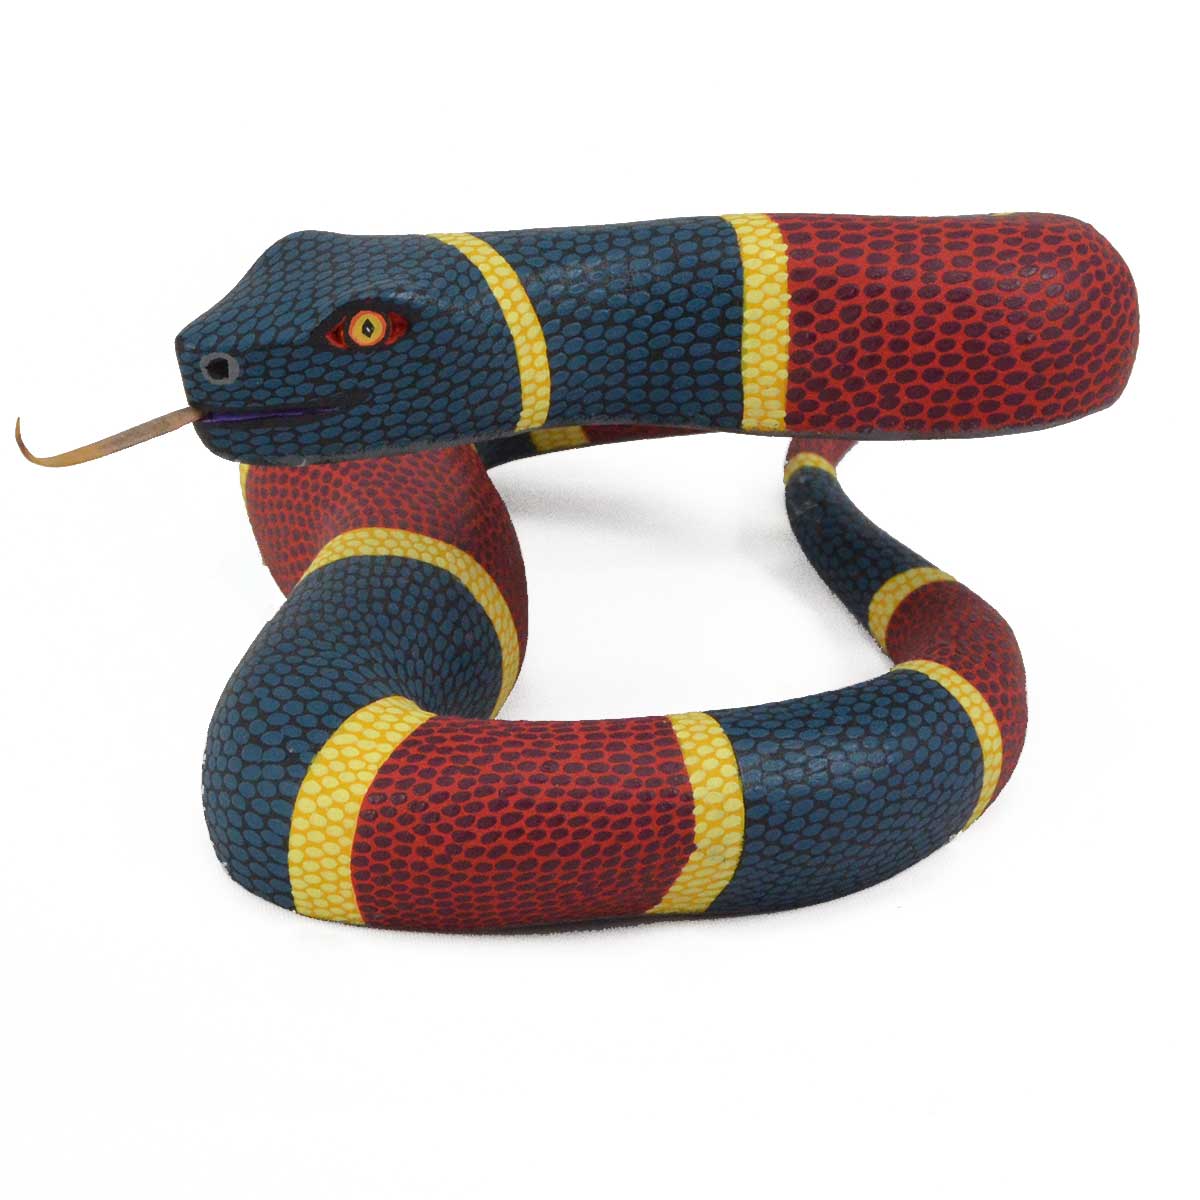 Eleazar Morales: Coral Snake | CulturalArt.org